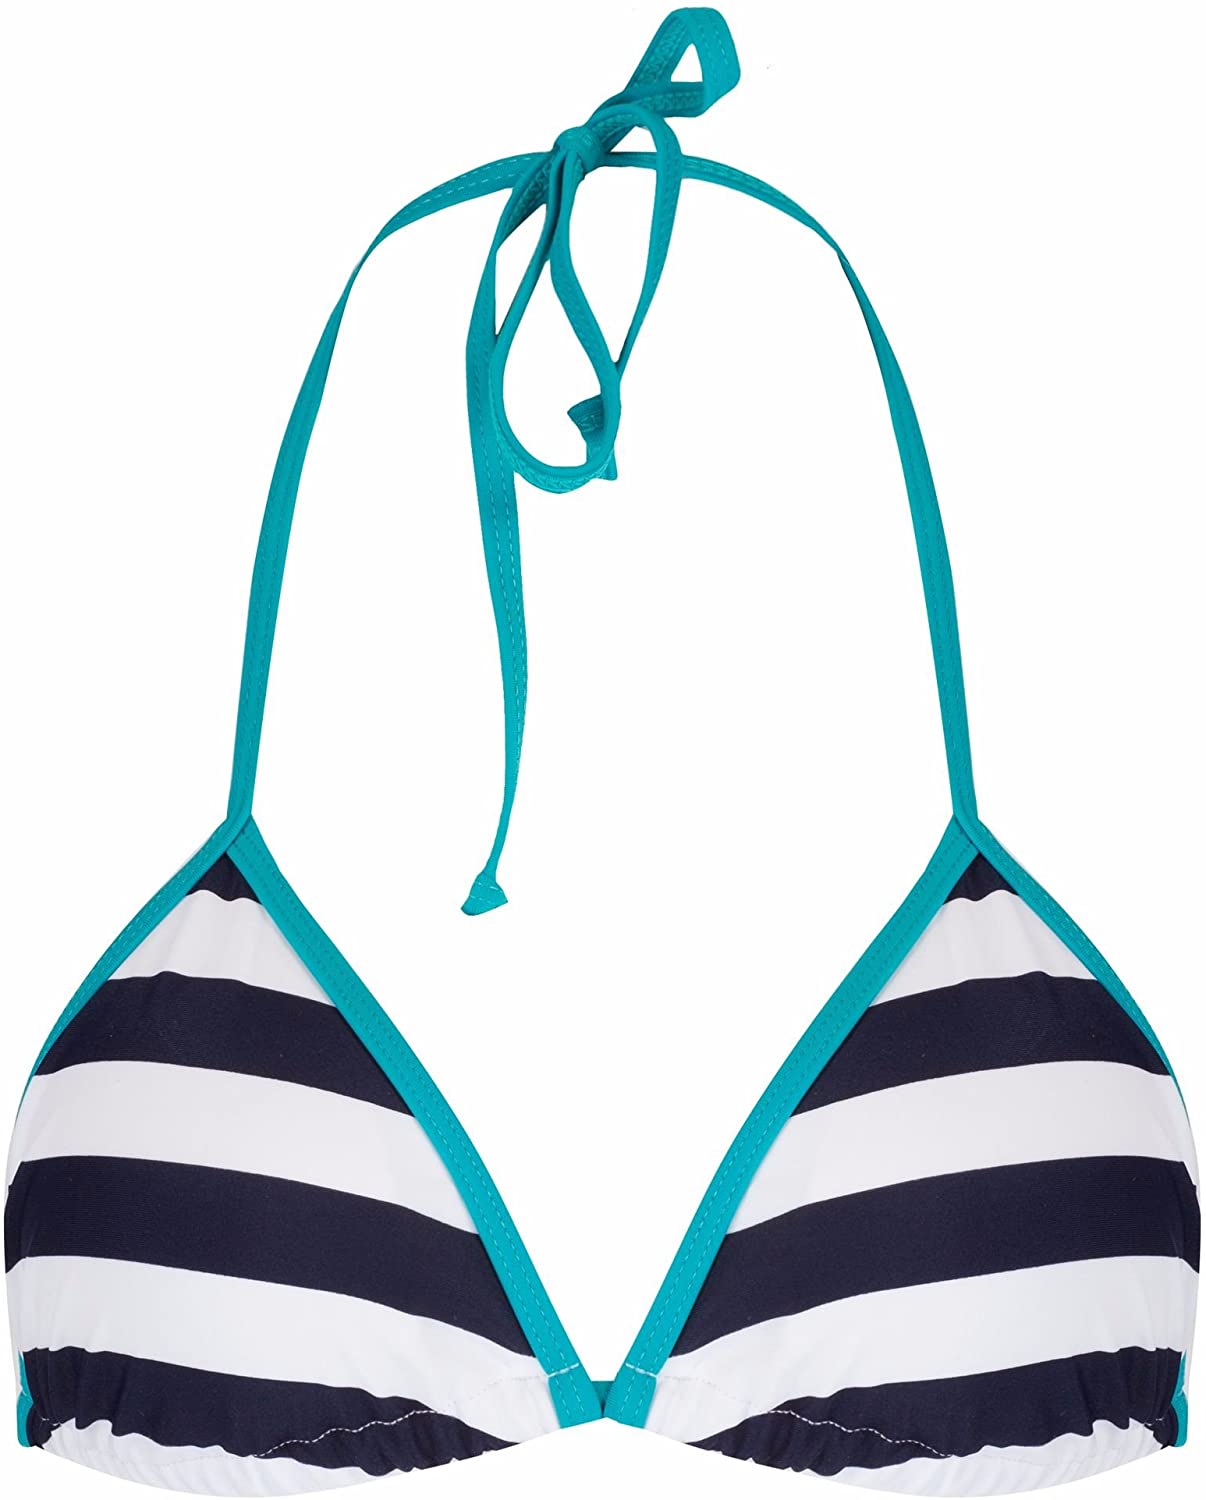 Regatta Women's Aceana String Top Bikini Navy - Stockpoint Apparel Outlet